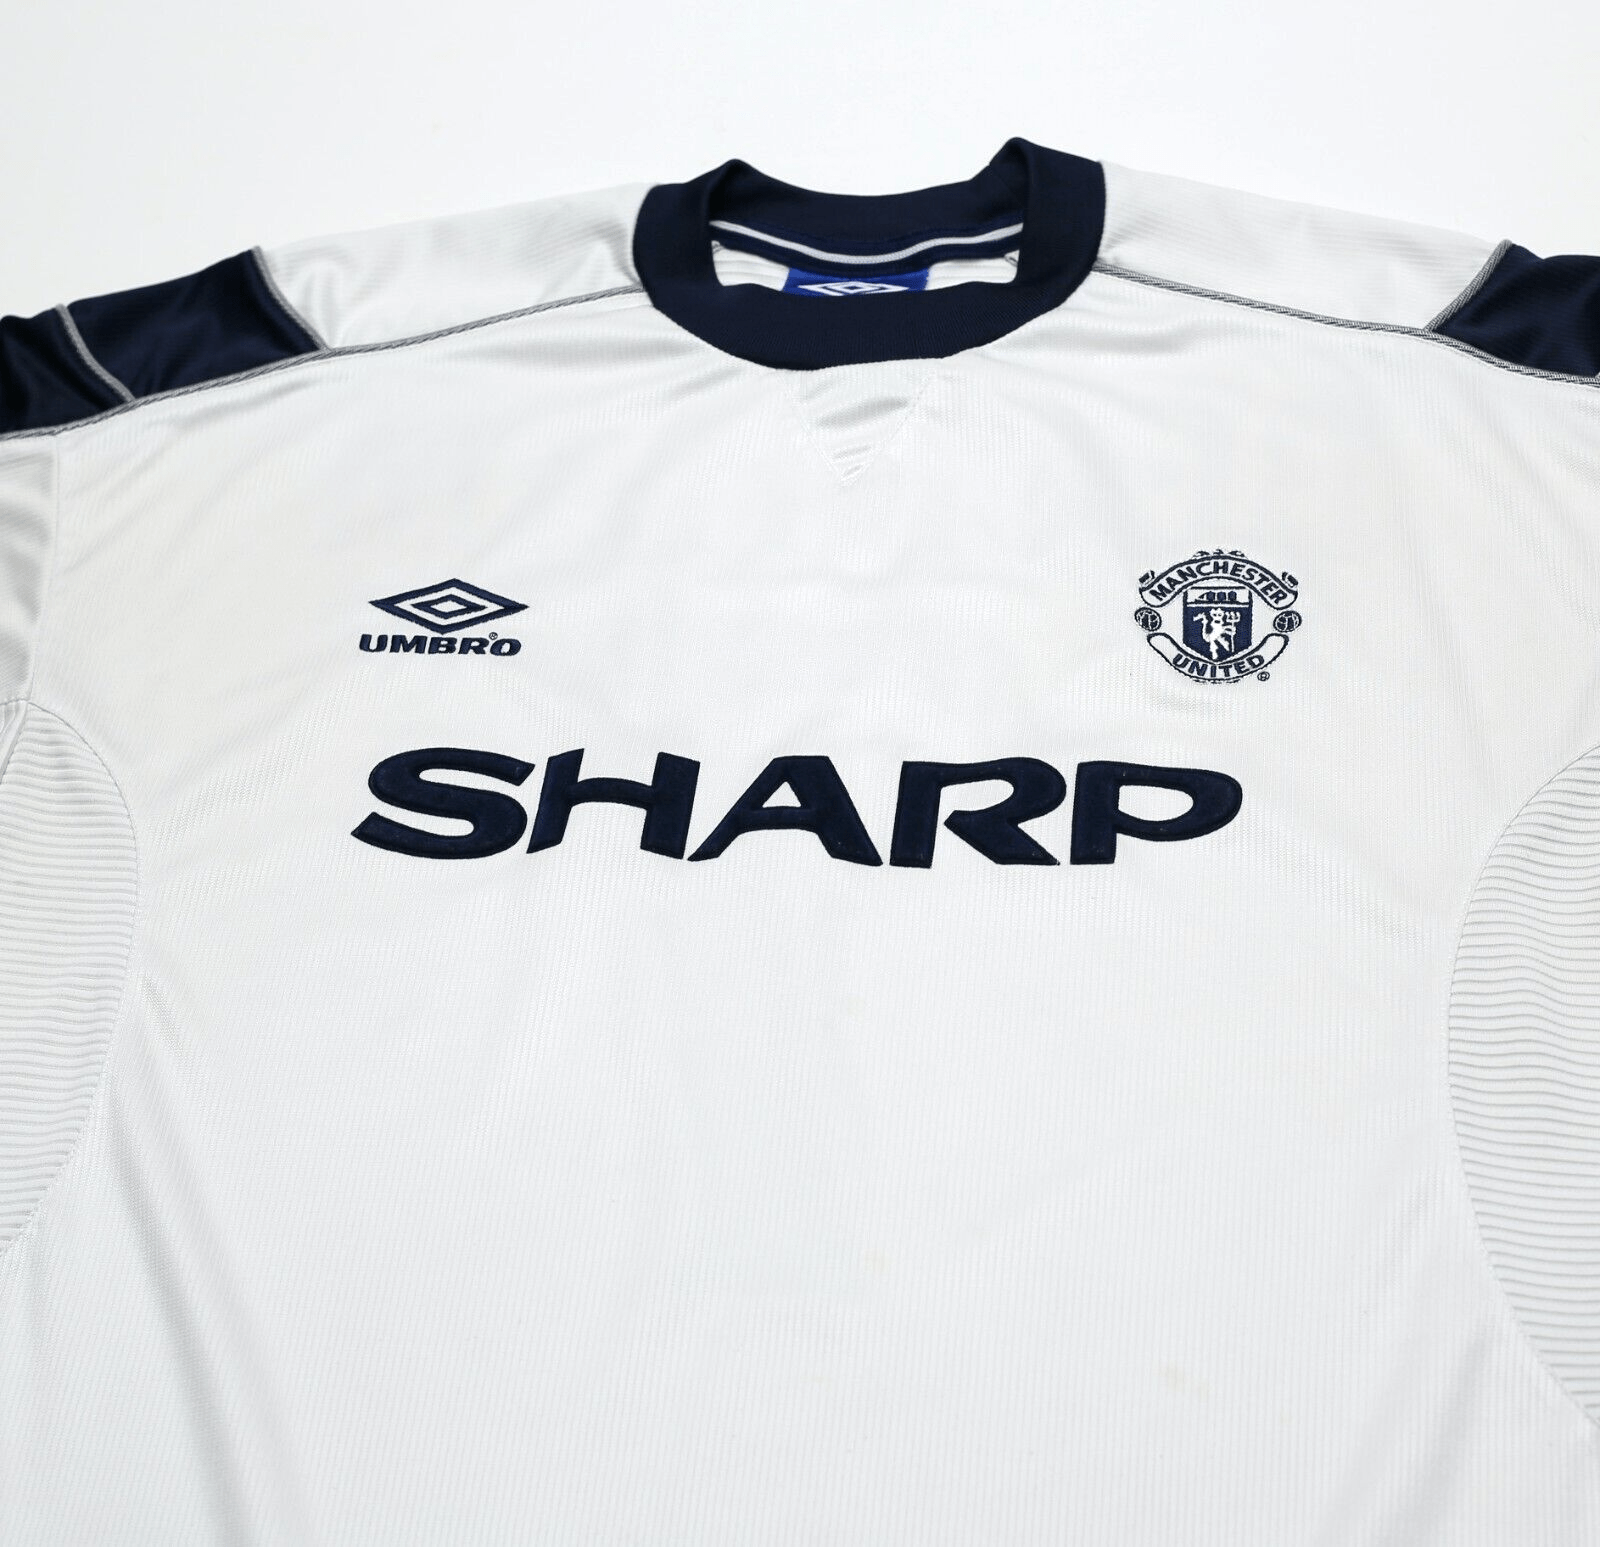 1999/00 BECKHAM #7 Manchester United Vintage Umbro UCL Football Shirt (L)